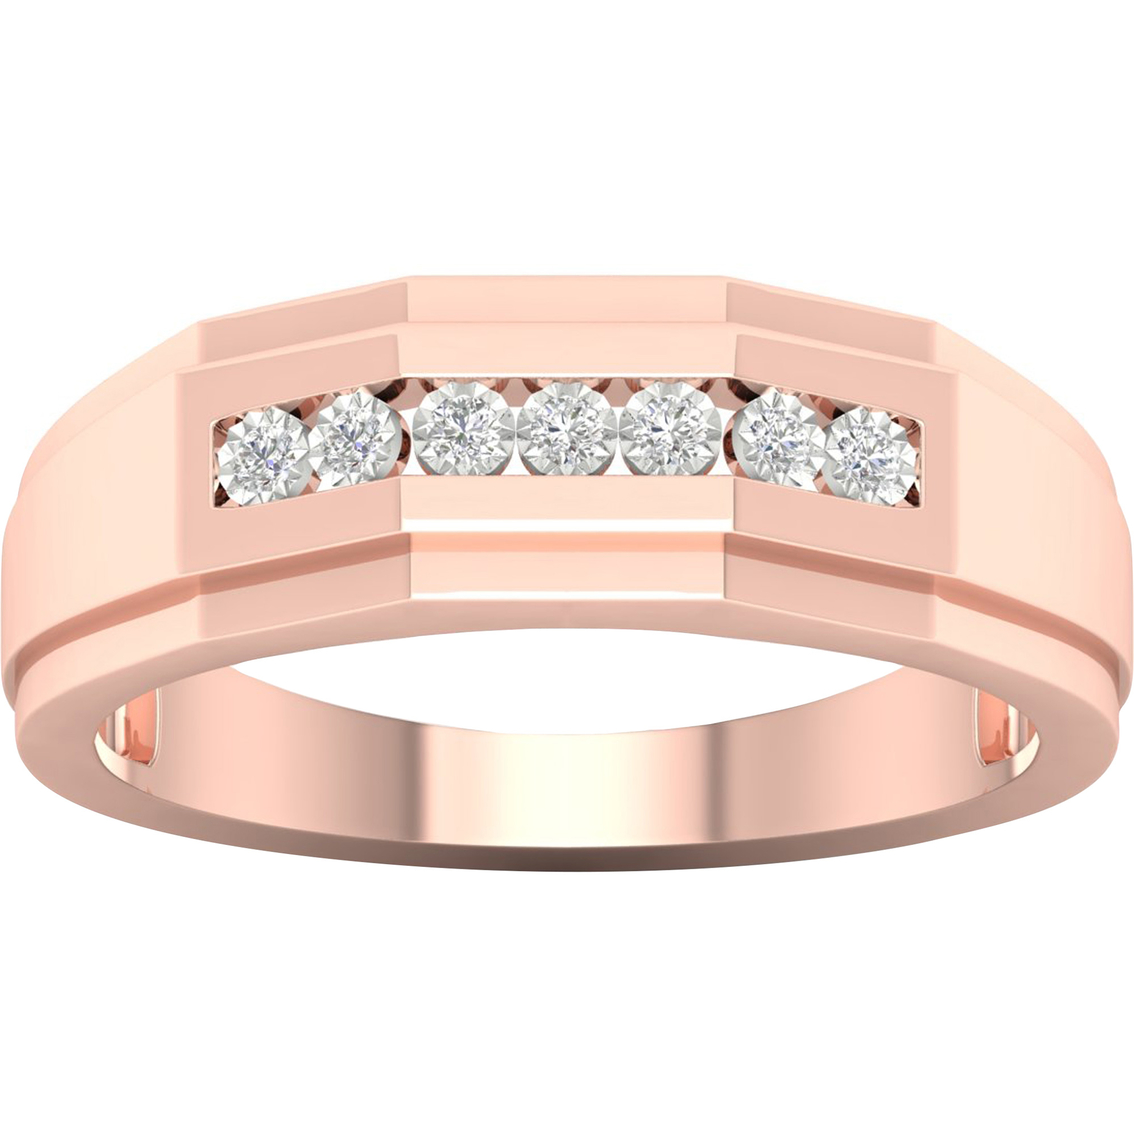 14k Rose Gold Over Sterling Silver Diamond Accent Ring | Men's Rings ...